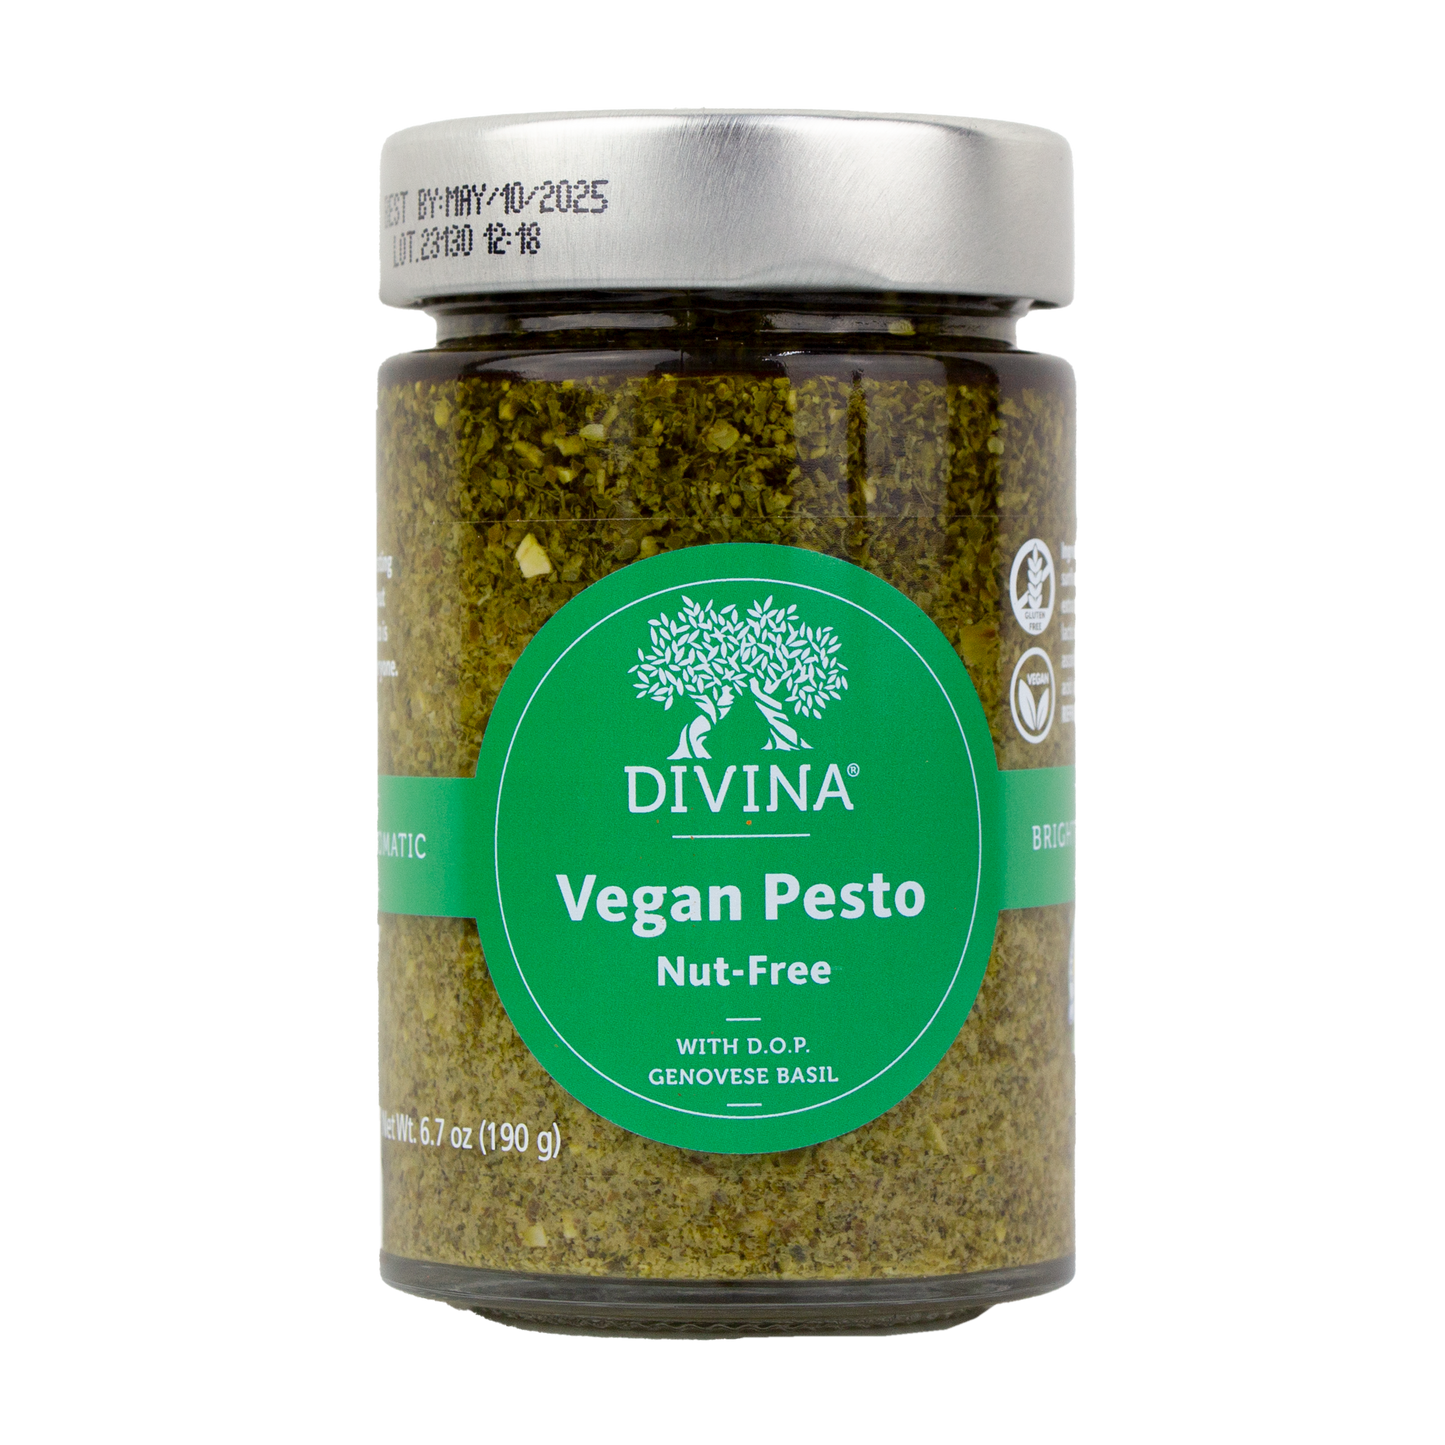 Divina - Vegan Pesto